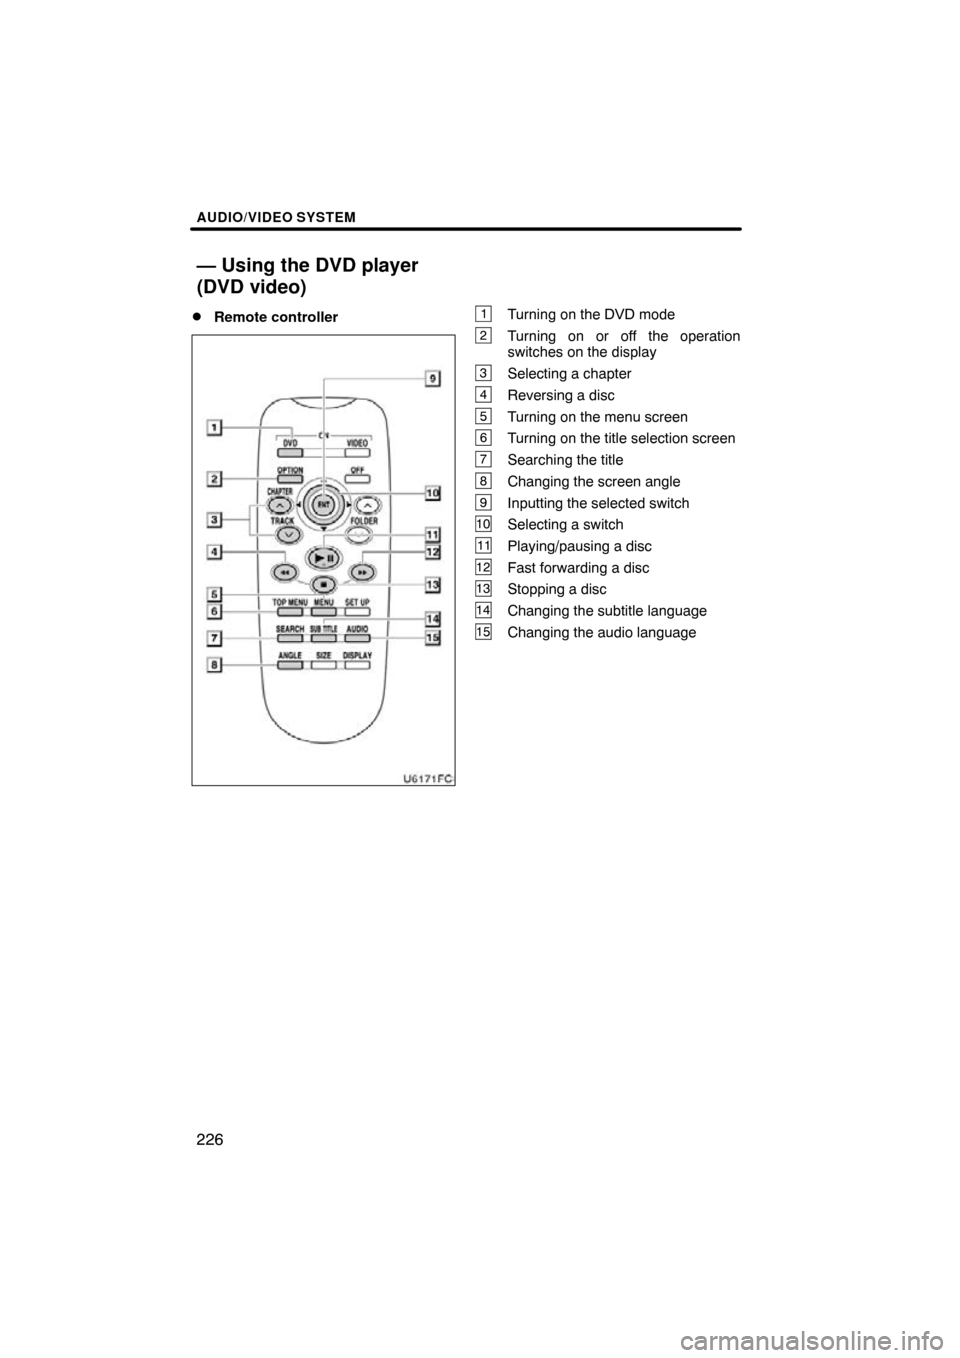 TOYOTA HIGHLANDER 2013 XU50 / 3.G Navigation Manual AUDIO/VIDEO SYSTEM
226

Remote controller1Turning on the DVD mode
2Turning on or off the operation
switches on the display
3Selecting a chapter
4Reversing a disc
5Turning on the menu screen
6Turning 